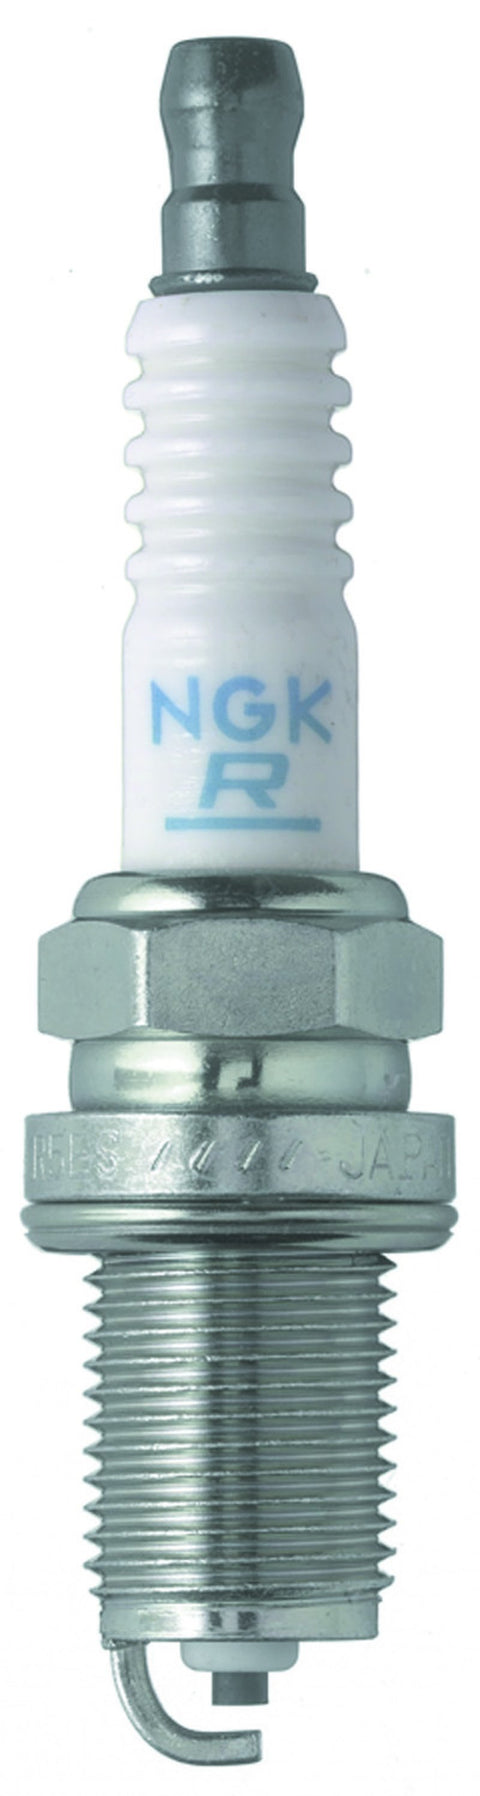 NGK Standard Spark Plug Box of 4 (2460)